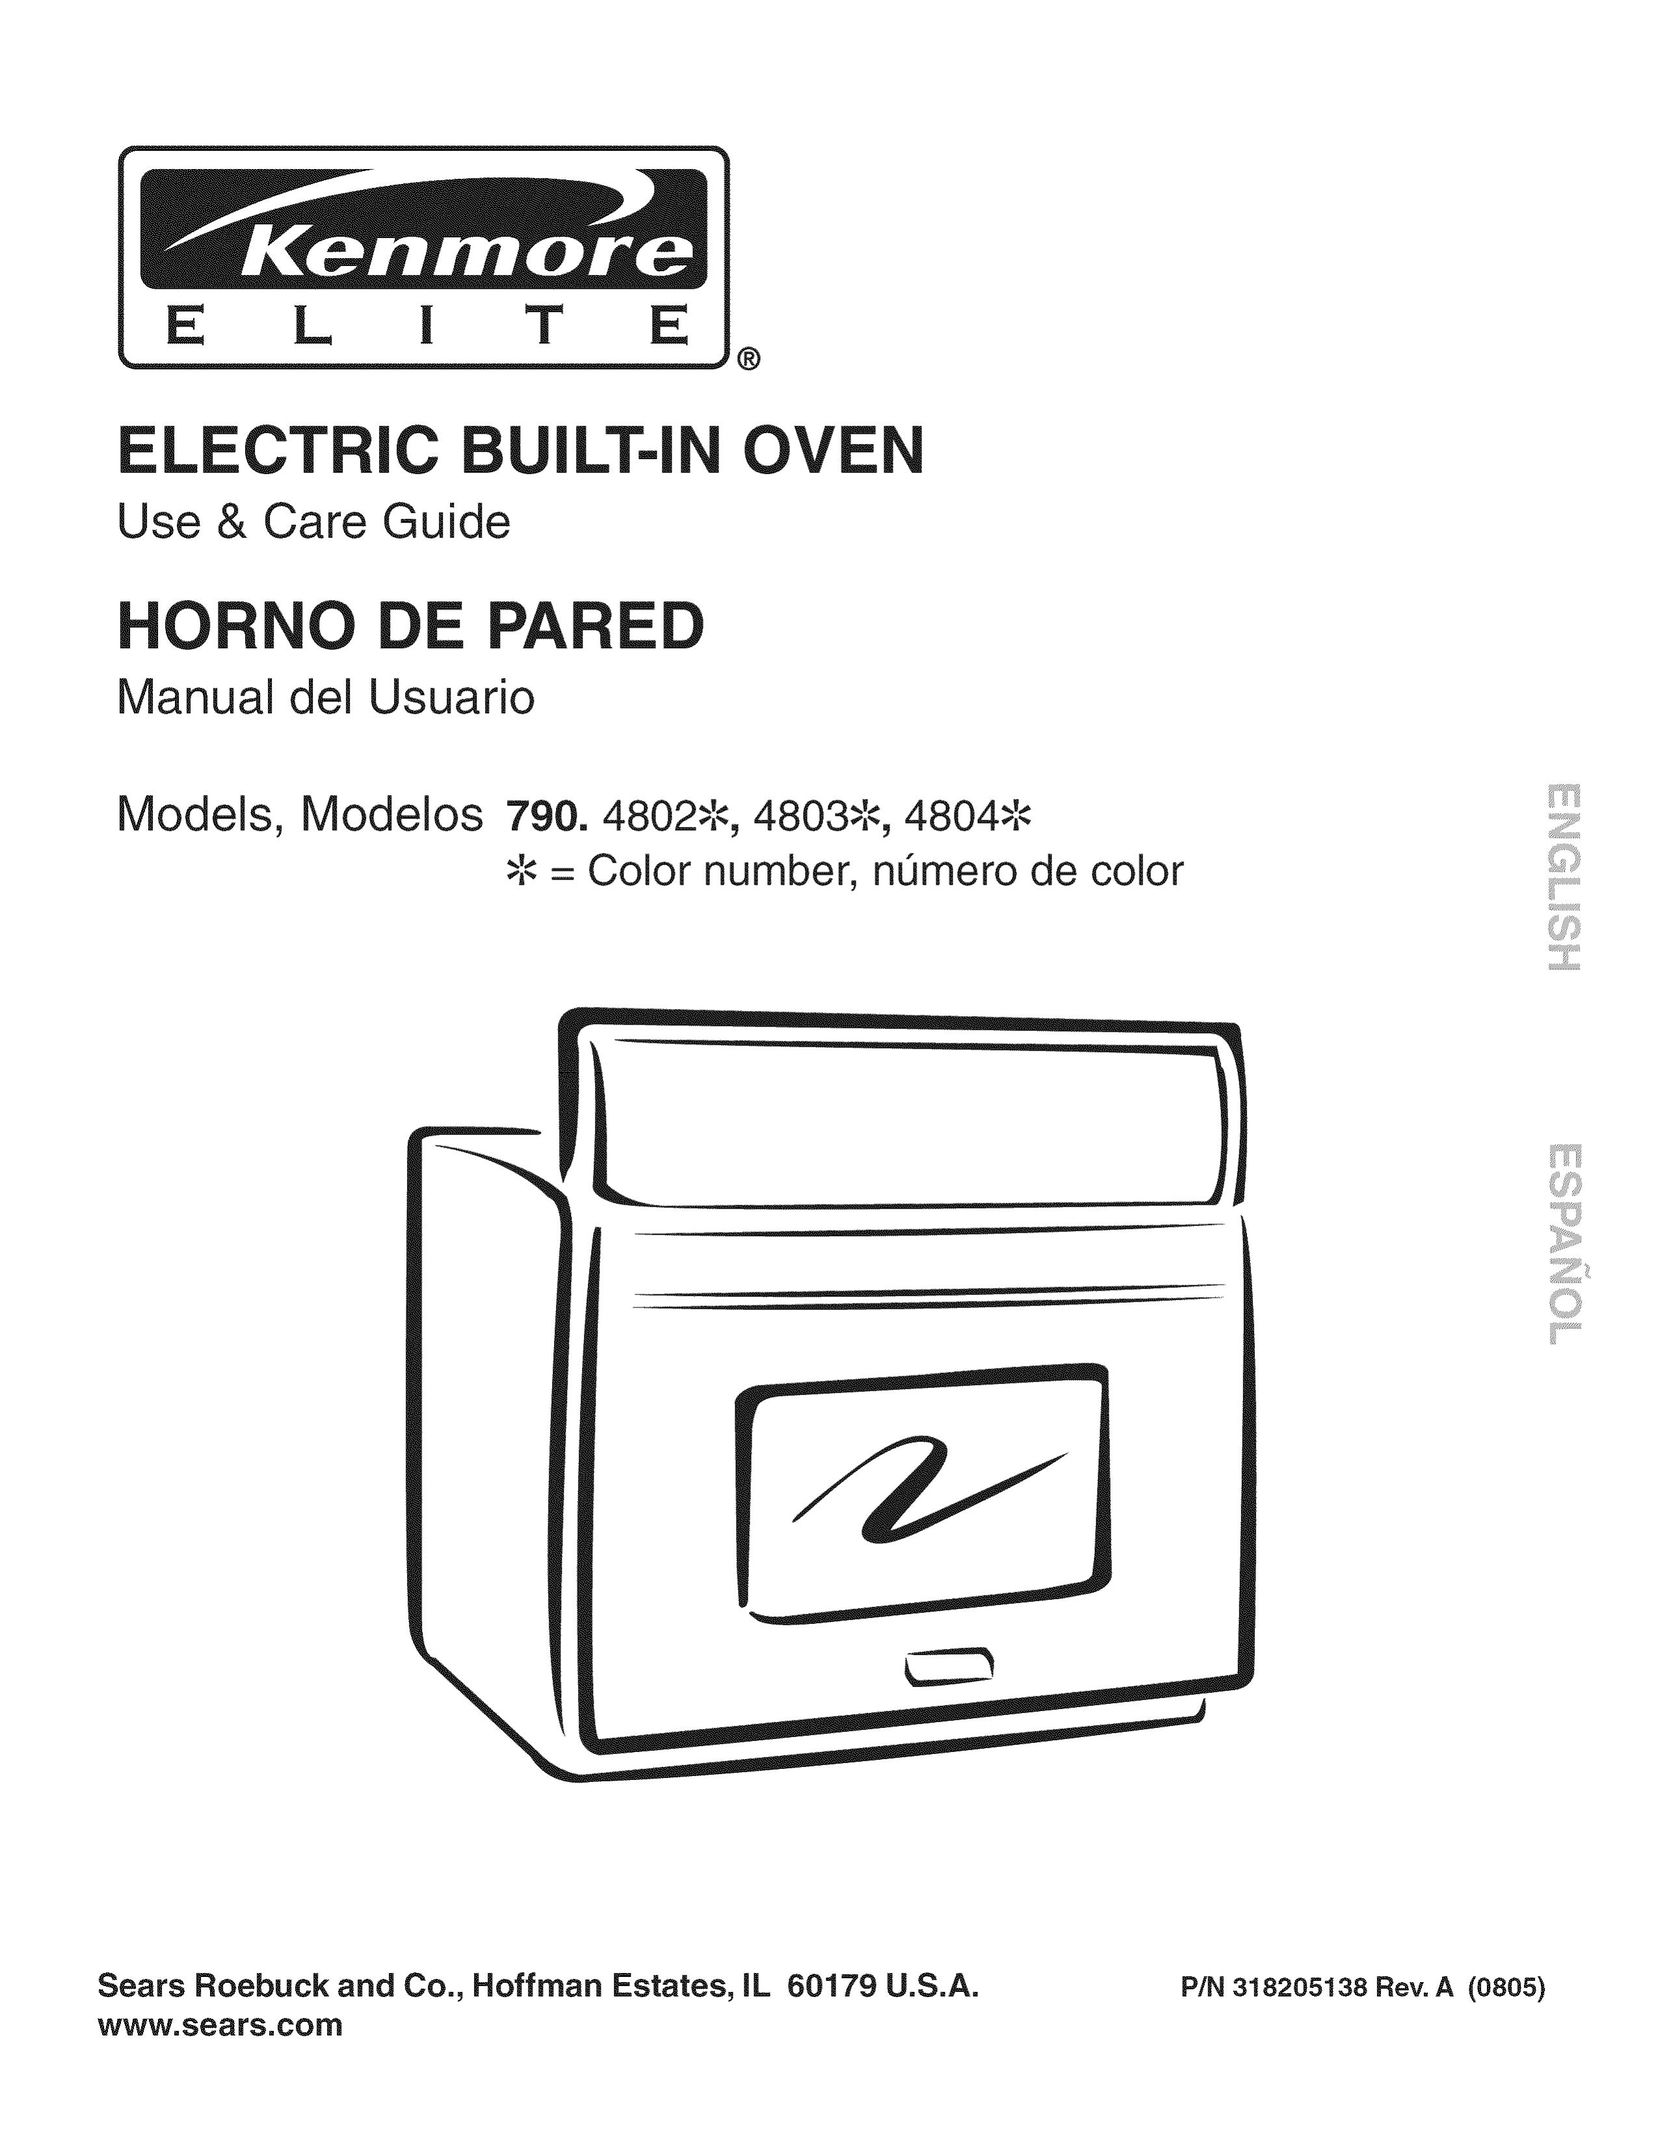 Kenmore 790.4803 Oven User Manual